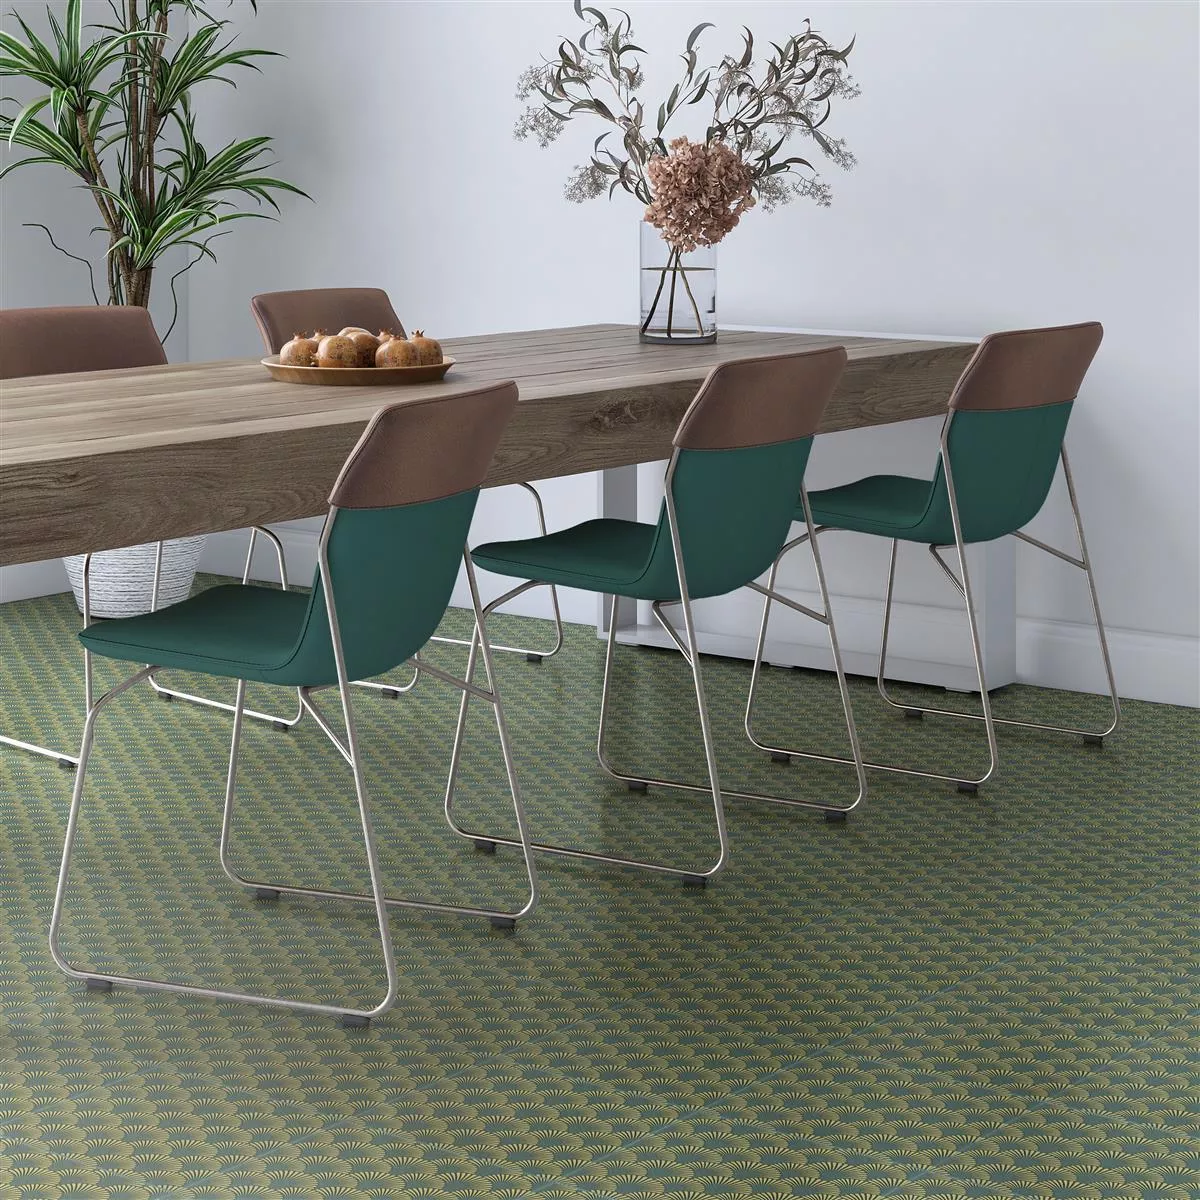 Floor Tiles Cement Optic Wildflower Green Decor 18,5x18,5cm 